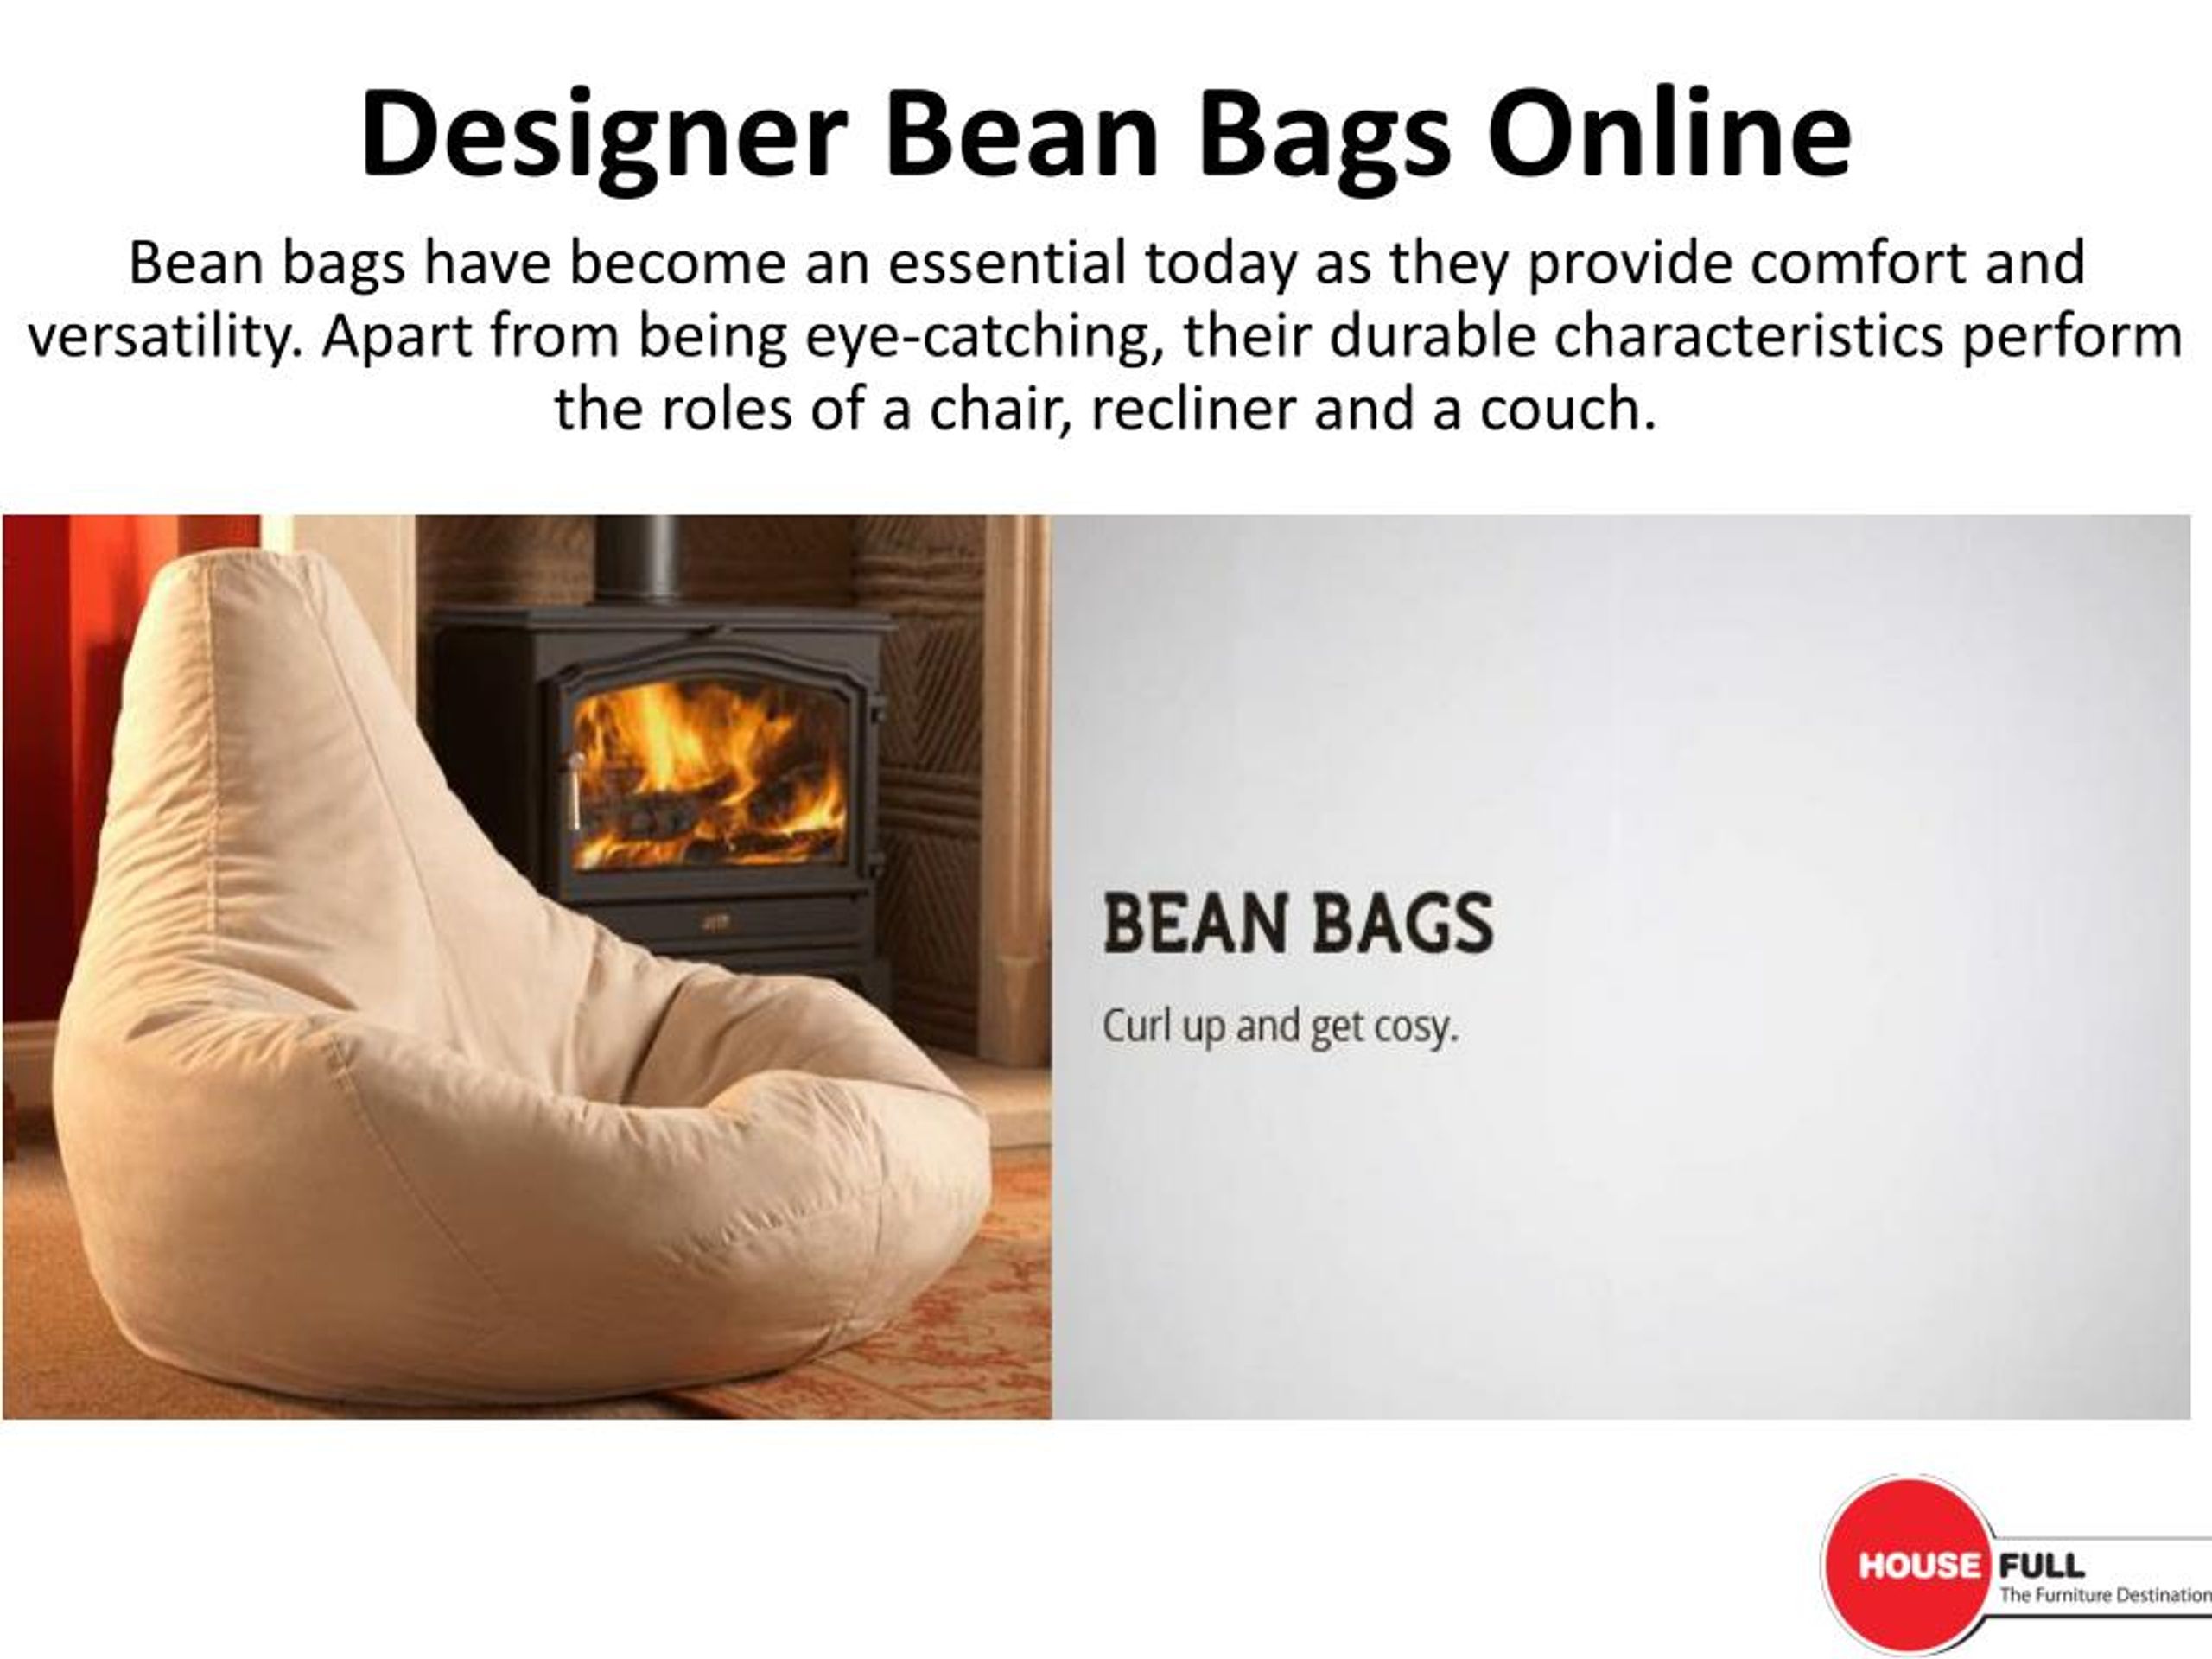 Buy Mollismoons Fur Bean Bag XXXL Size Without Beans online